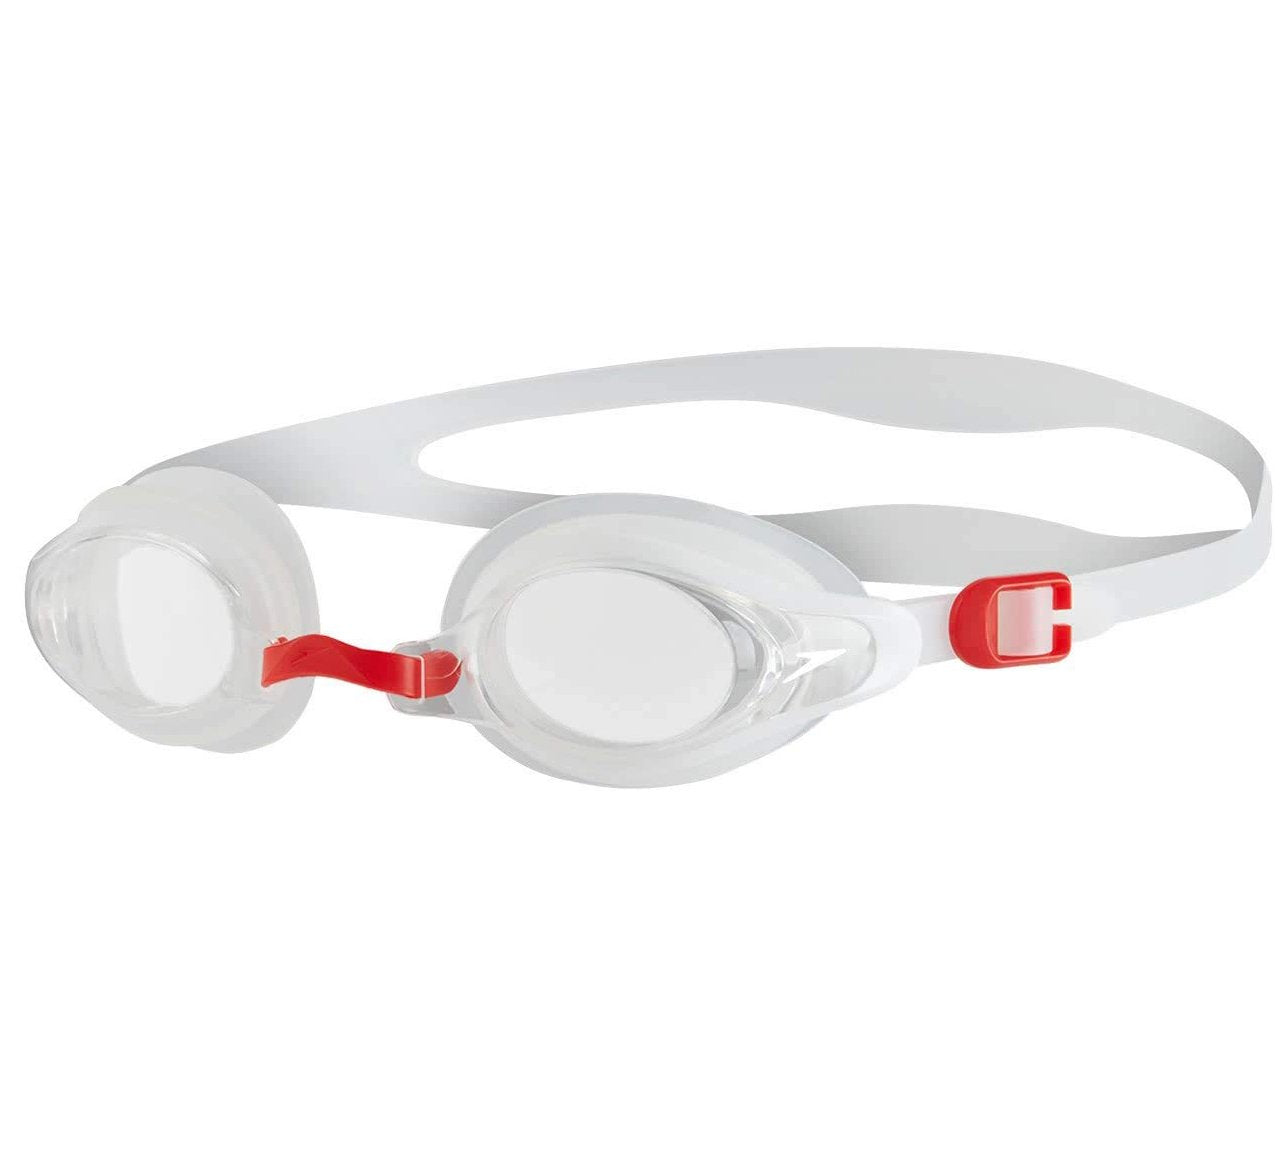 Speedo Mariner Supreme Swimming Goggle - Silver White - Best Price online Prokicksports.com